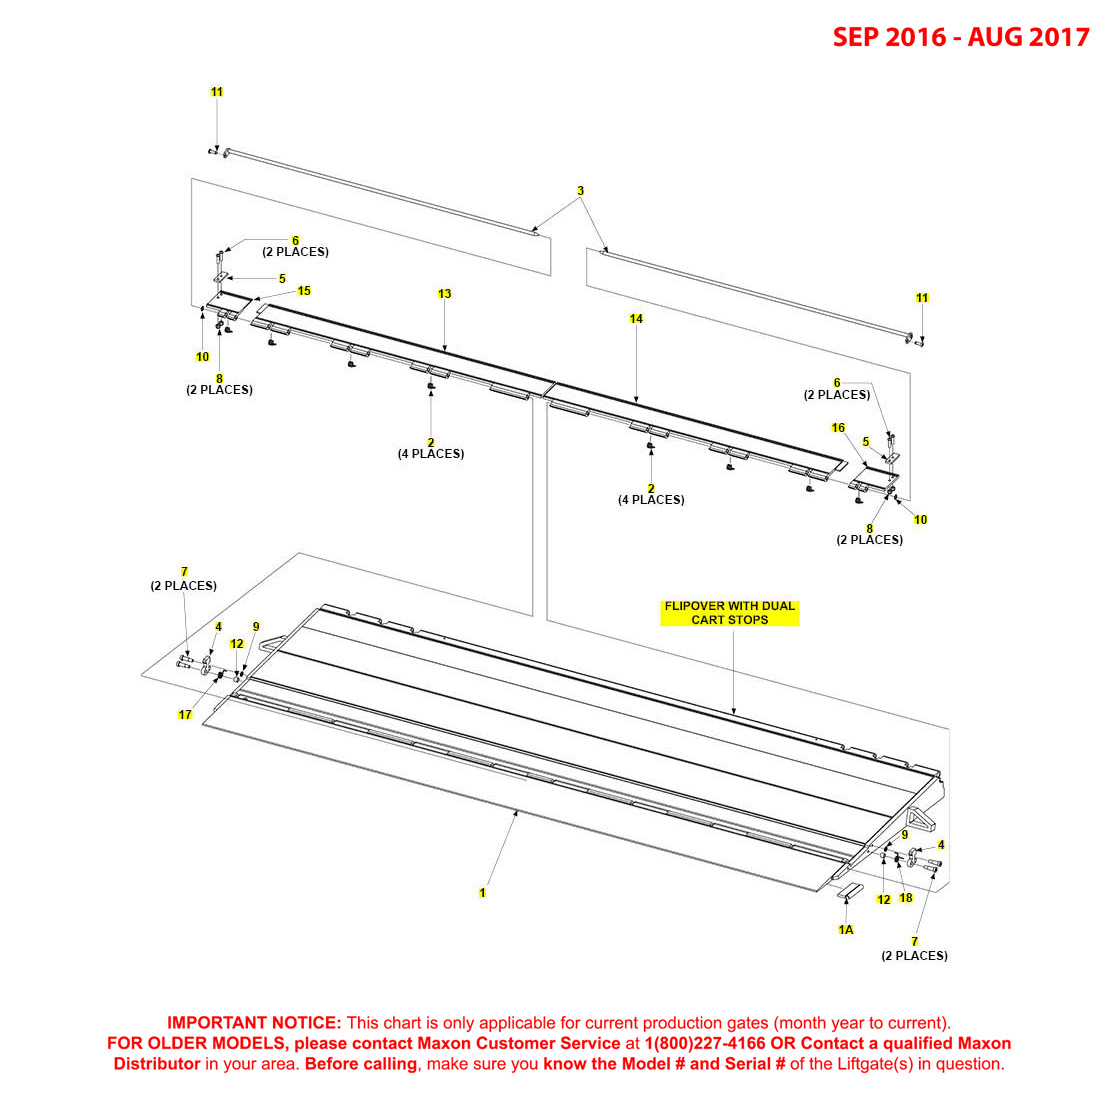 Maxon GPTWR (Sep 2016 - Aug 2017) Flipover With Dual Cart Stops Diagram